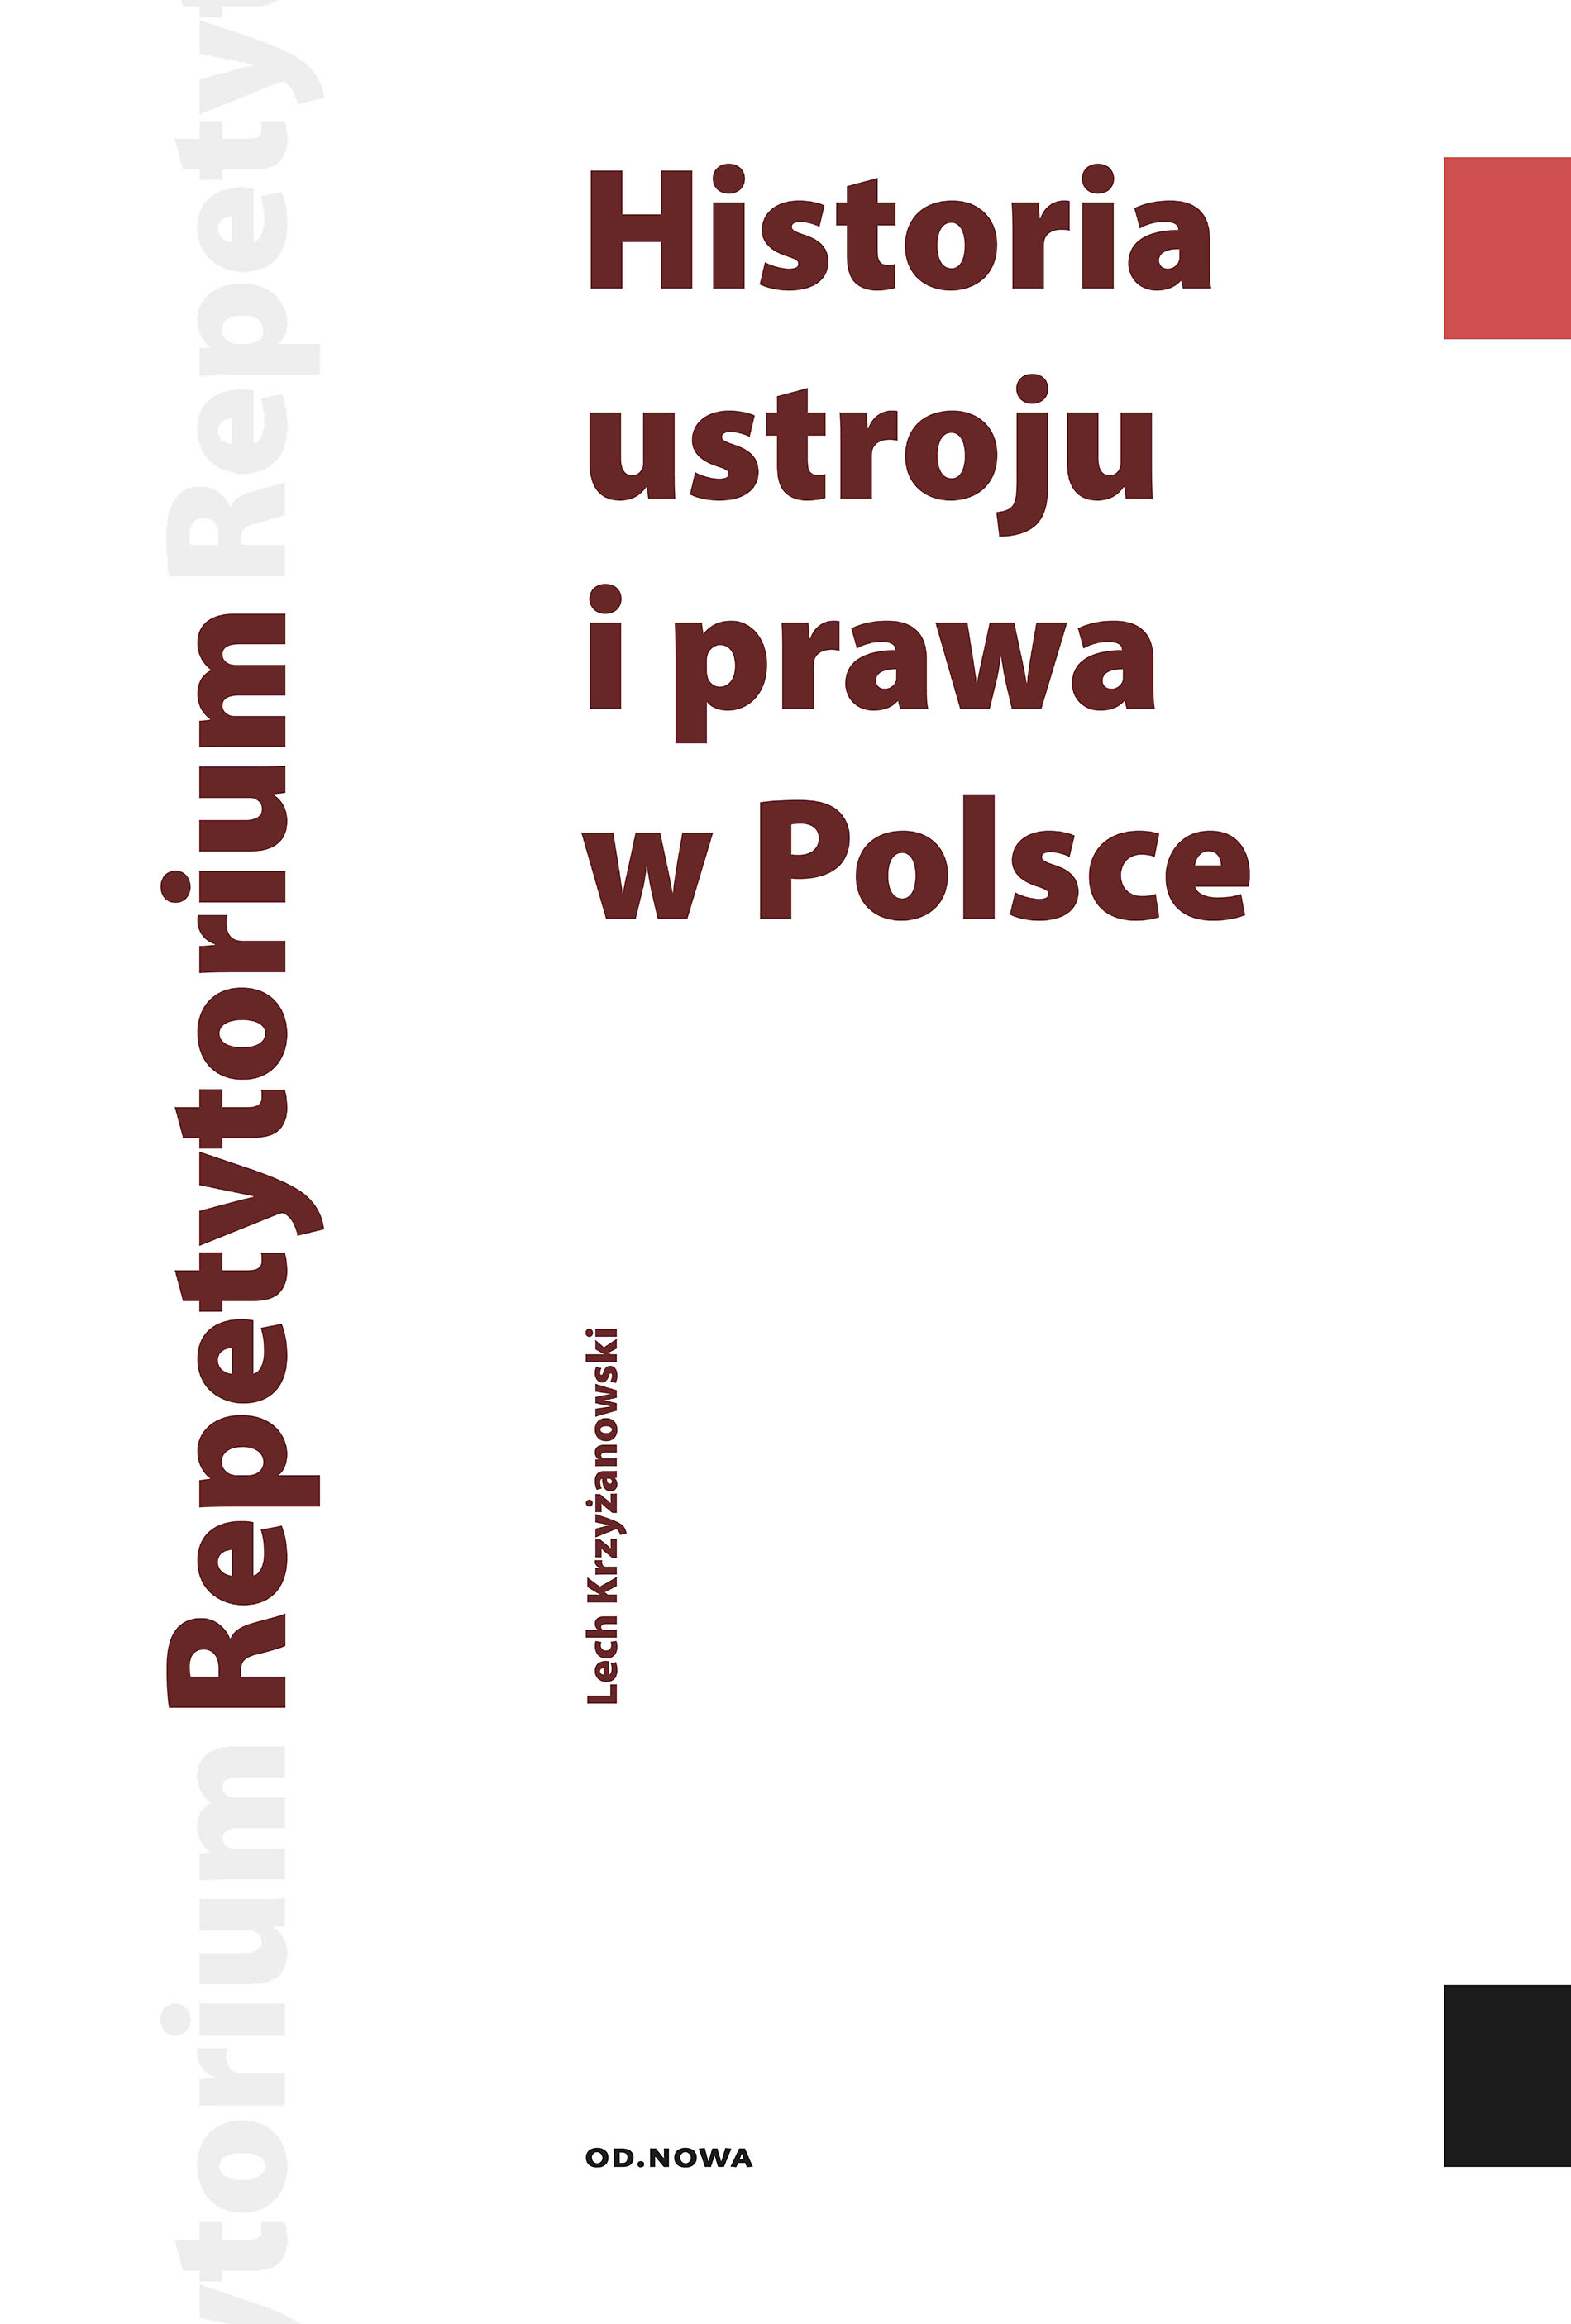 Historia ustroju i prawa w Polsce